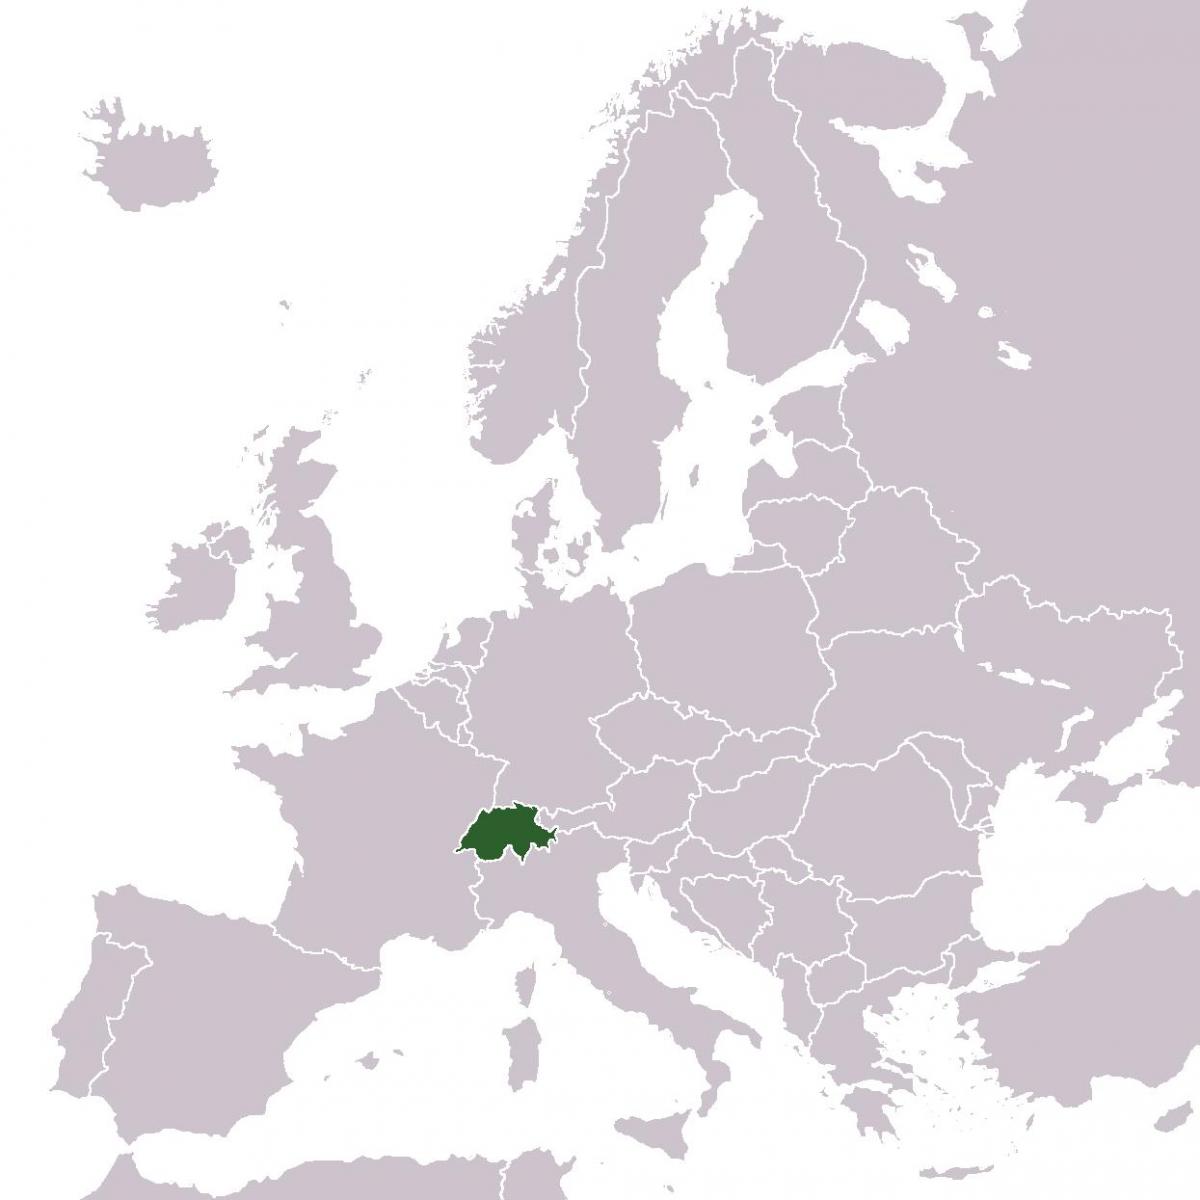 sveits sted i europa kart